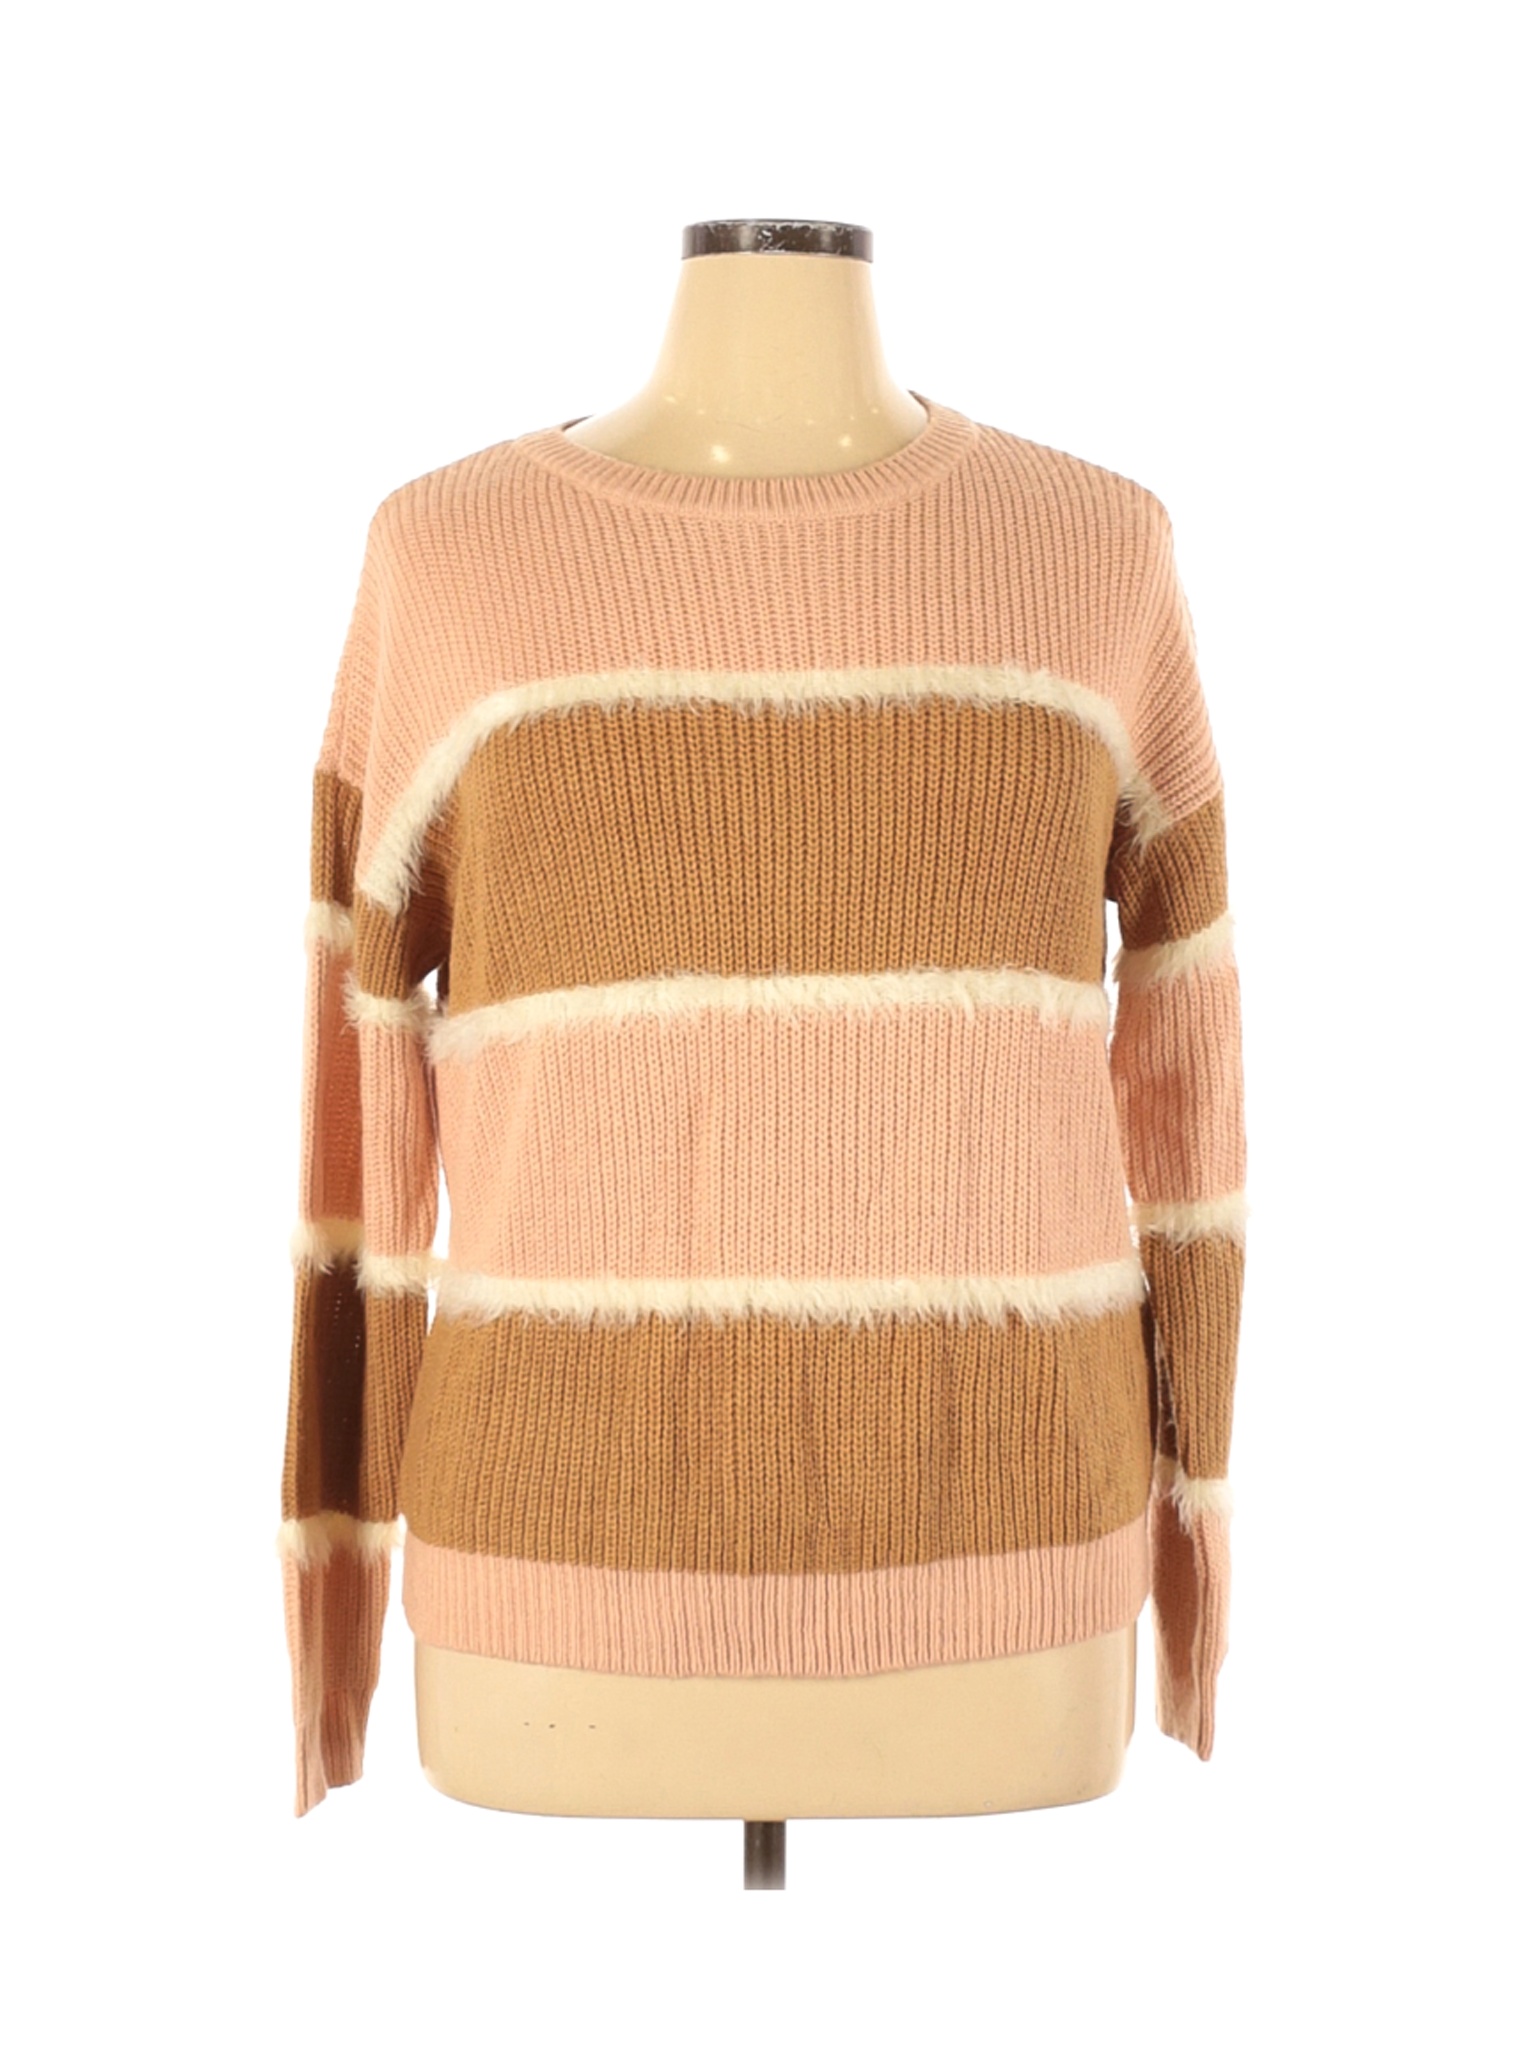 NWT Vero Moda Women Brown Pullover Sweater XL | eBay